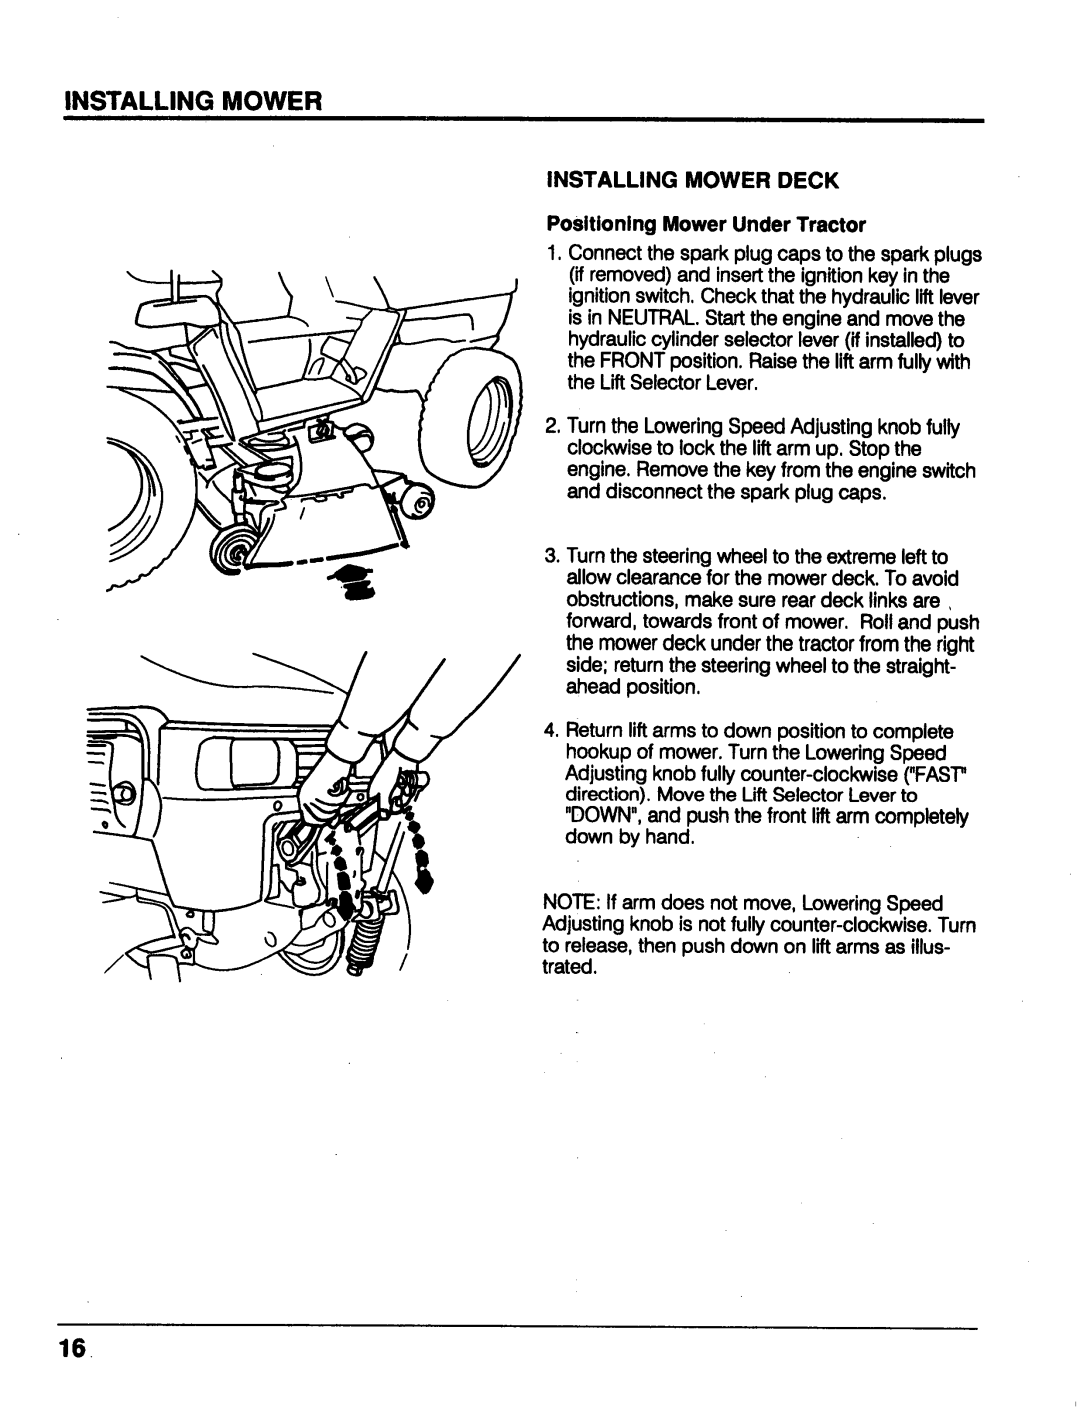 Honda Power Equipment MM52 manual Installing Mower Deck, Positioning Mower Under Tractor 